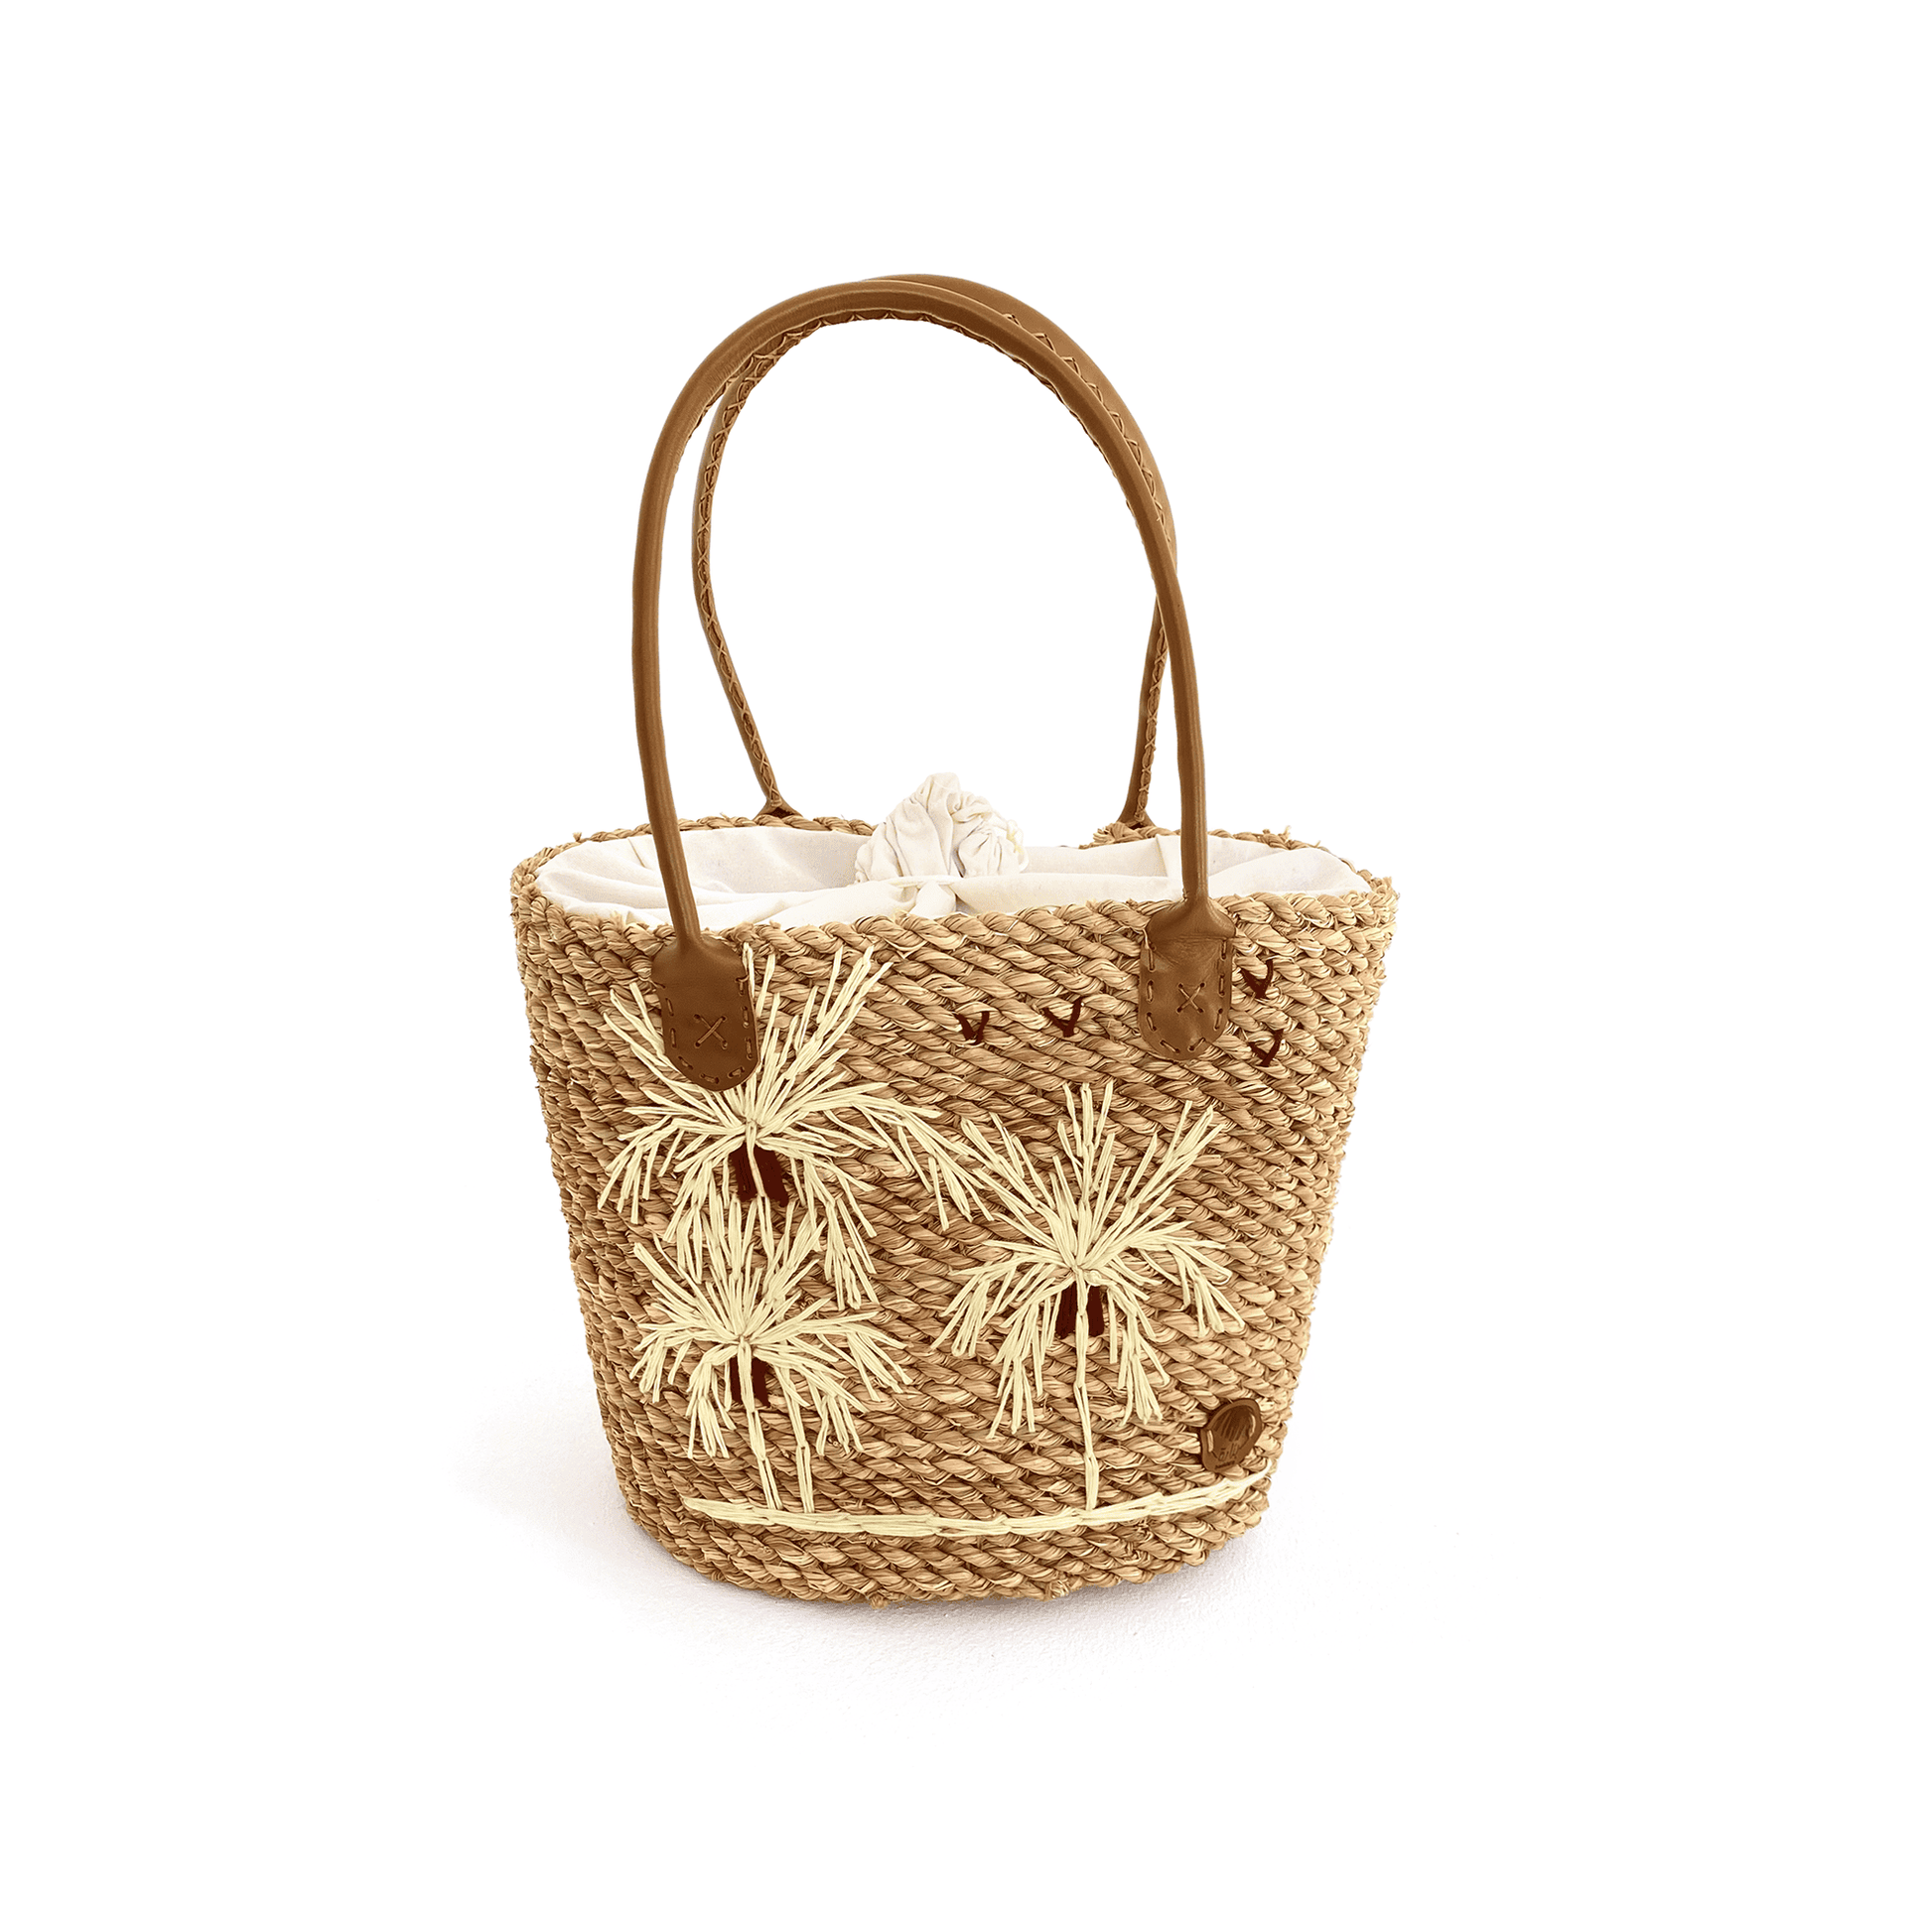 Halfa bag embroidered with leather handle. حقيبة حلفا مطرزة بيد جلد